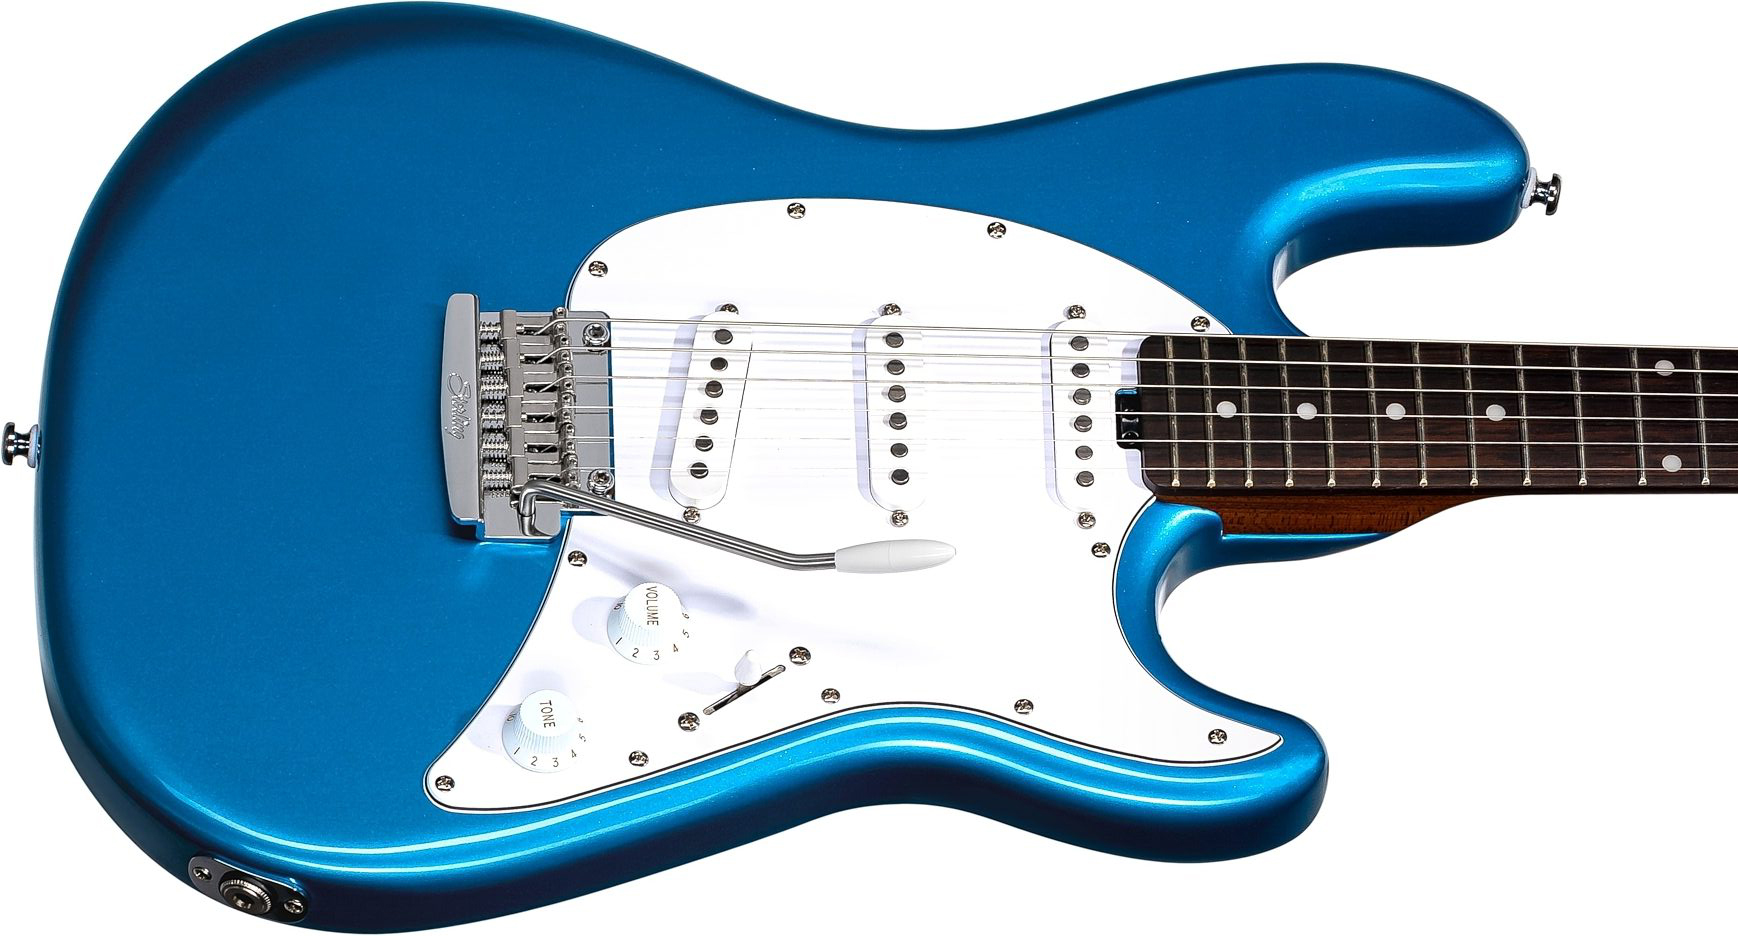 Sterling By Musicman Cutlass Ct50sss 3s Trem Rw - Toluca Lake Blue - Guitarra eléctrica con forma de str. - Variation 2